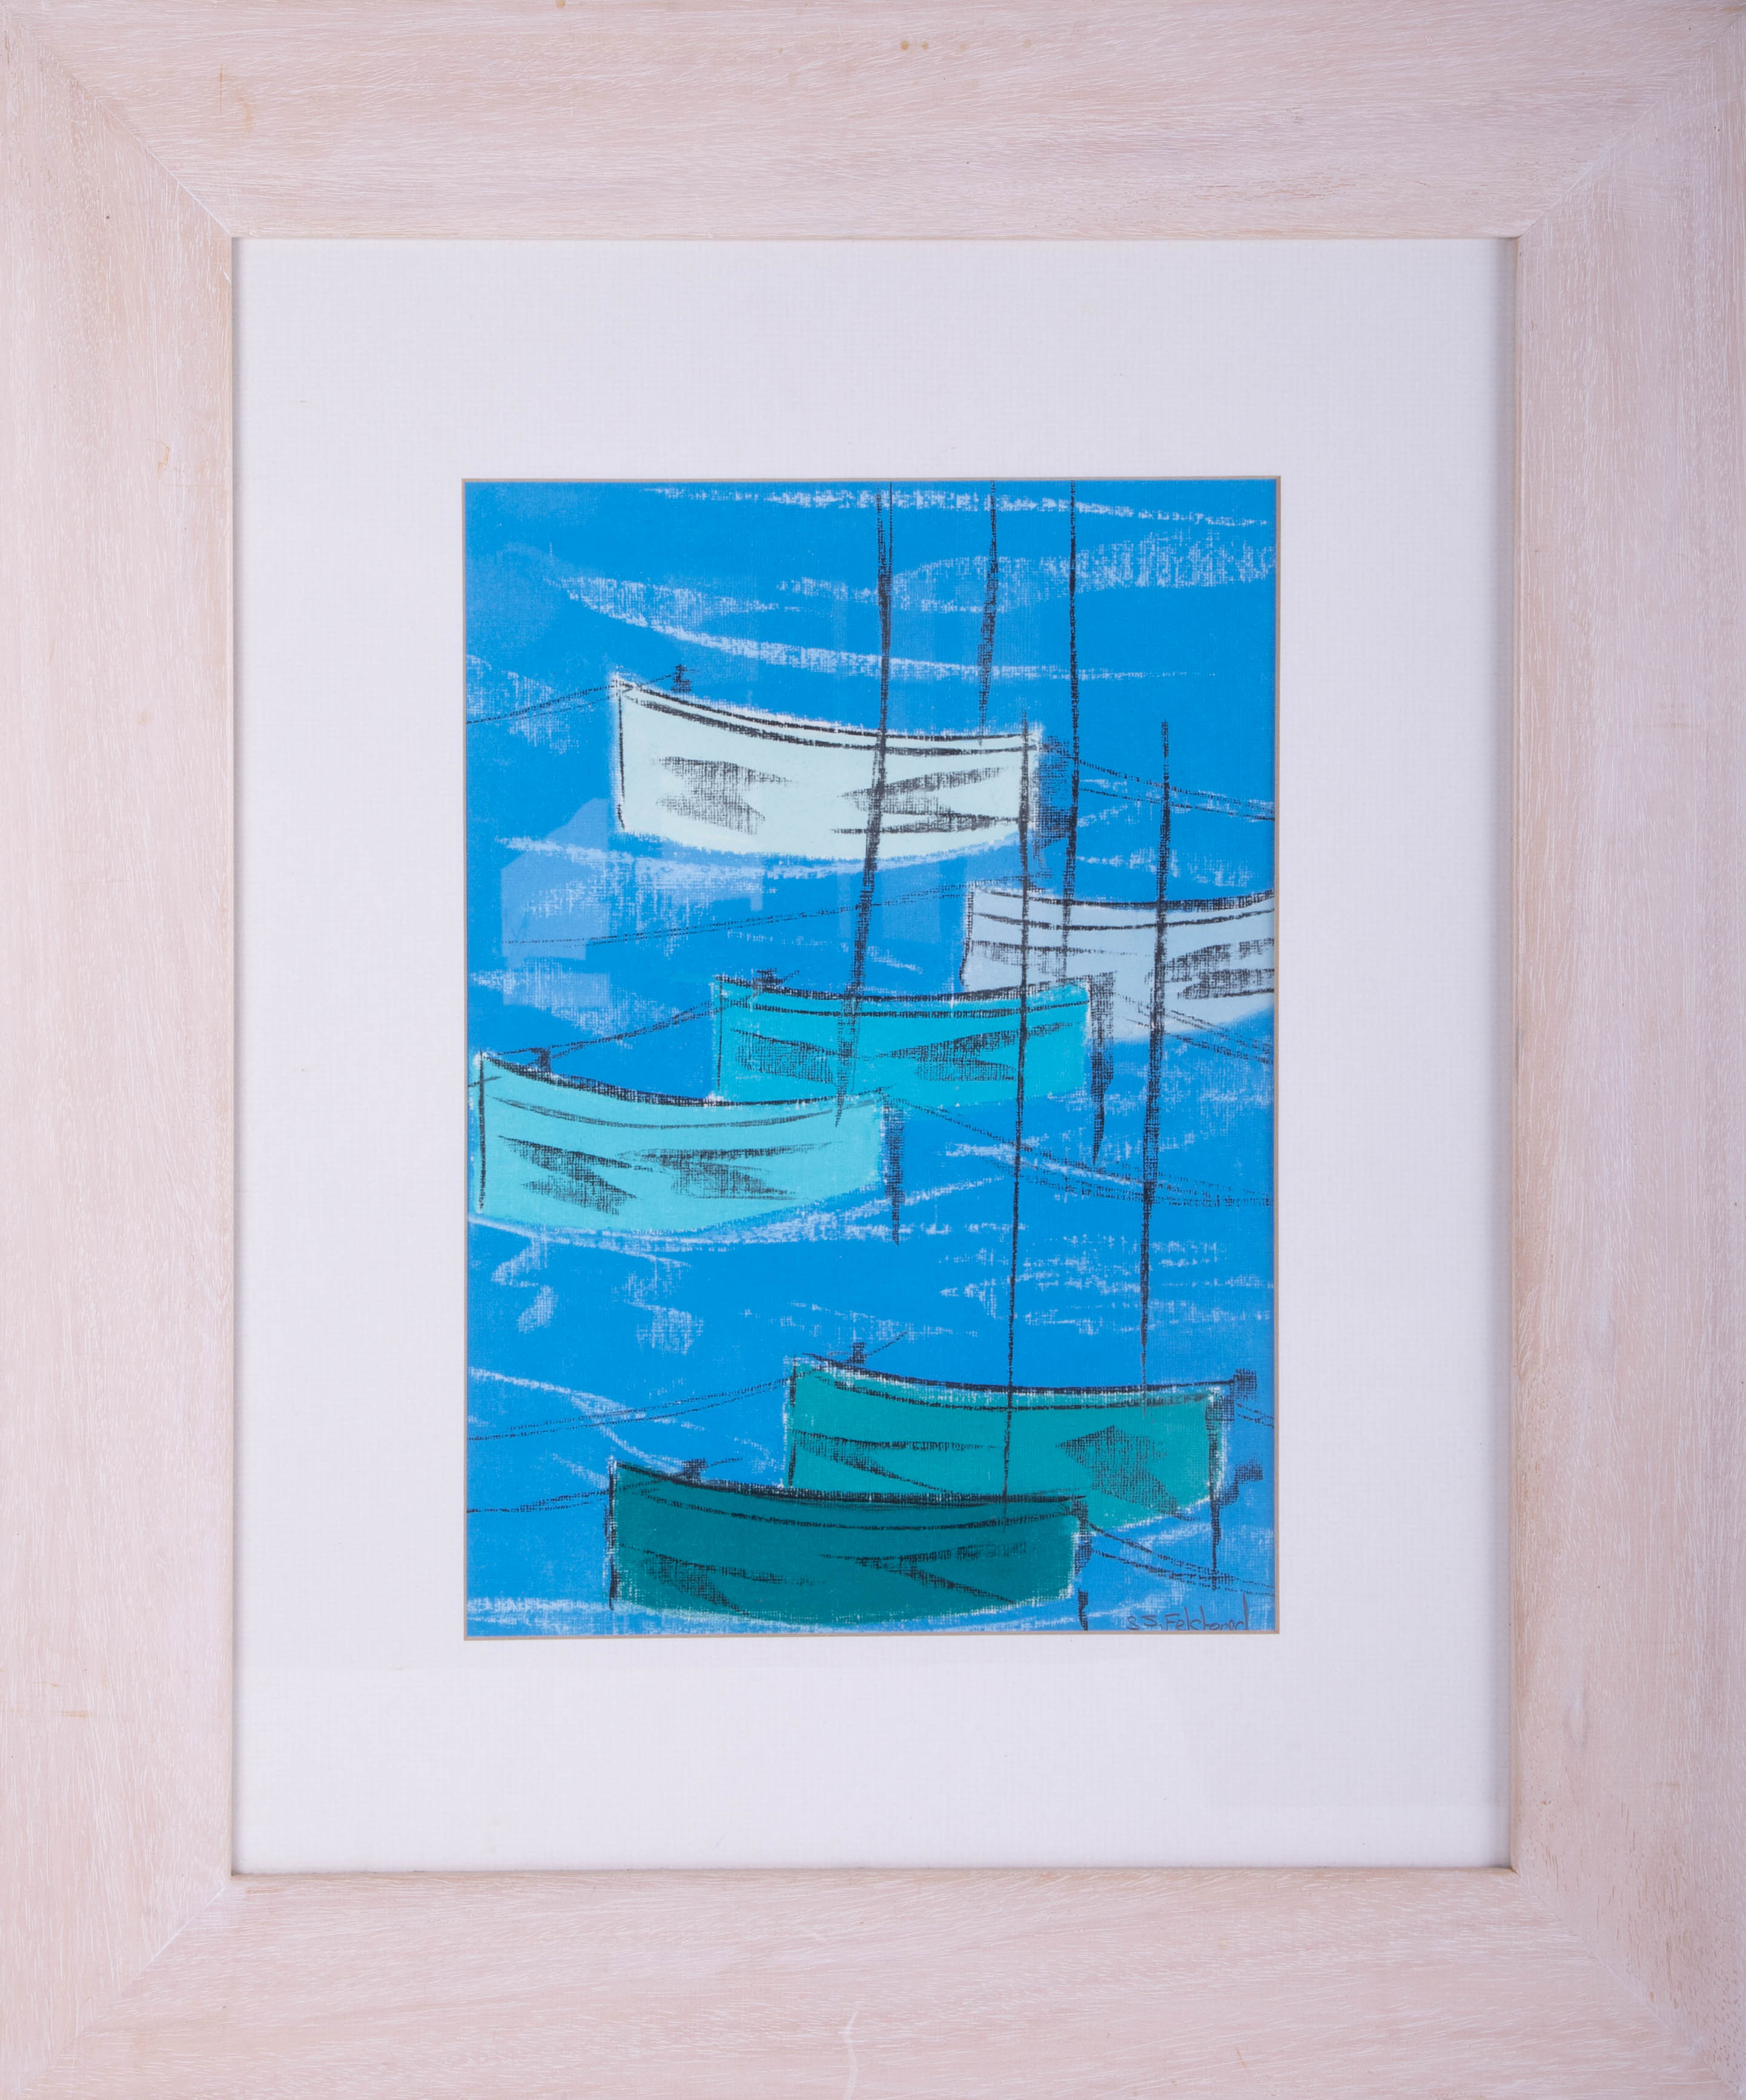 Stephen Felstead, mixed media 'Moored Boats', 33cm x 24cm, framed.